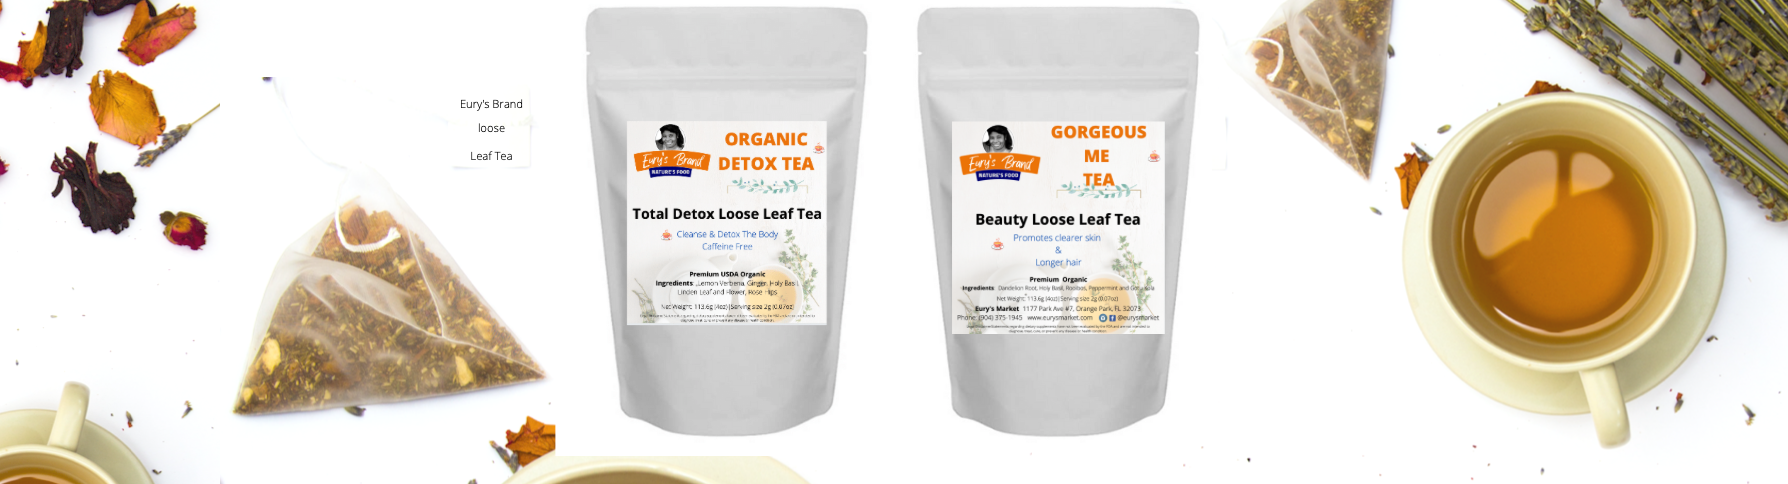 Cerise confite, Tea & More Dose, 100g